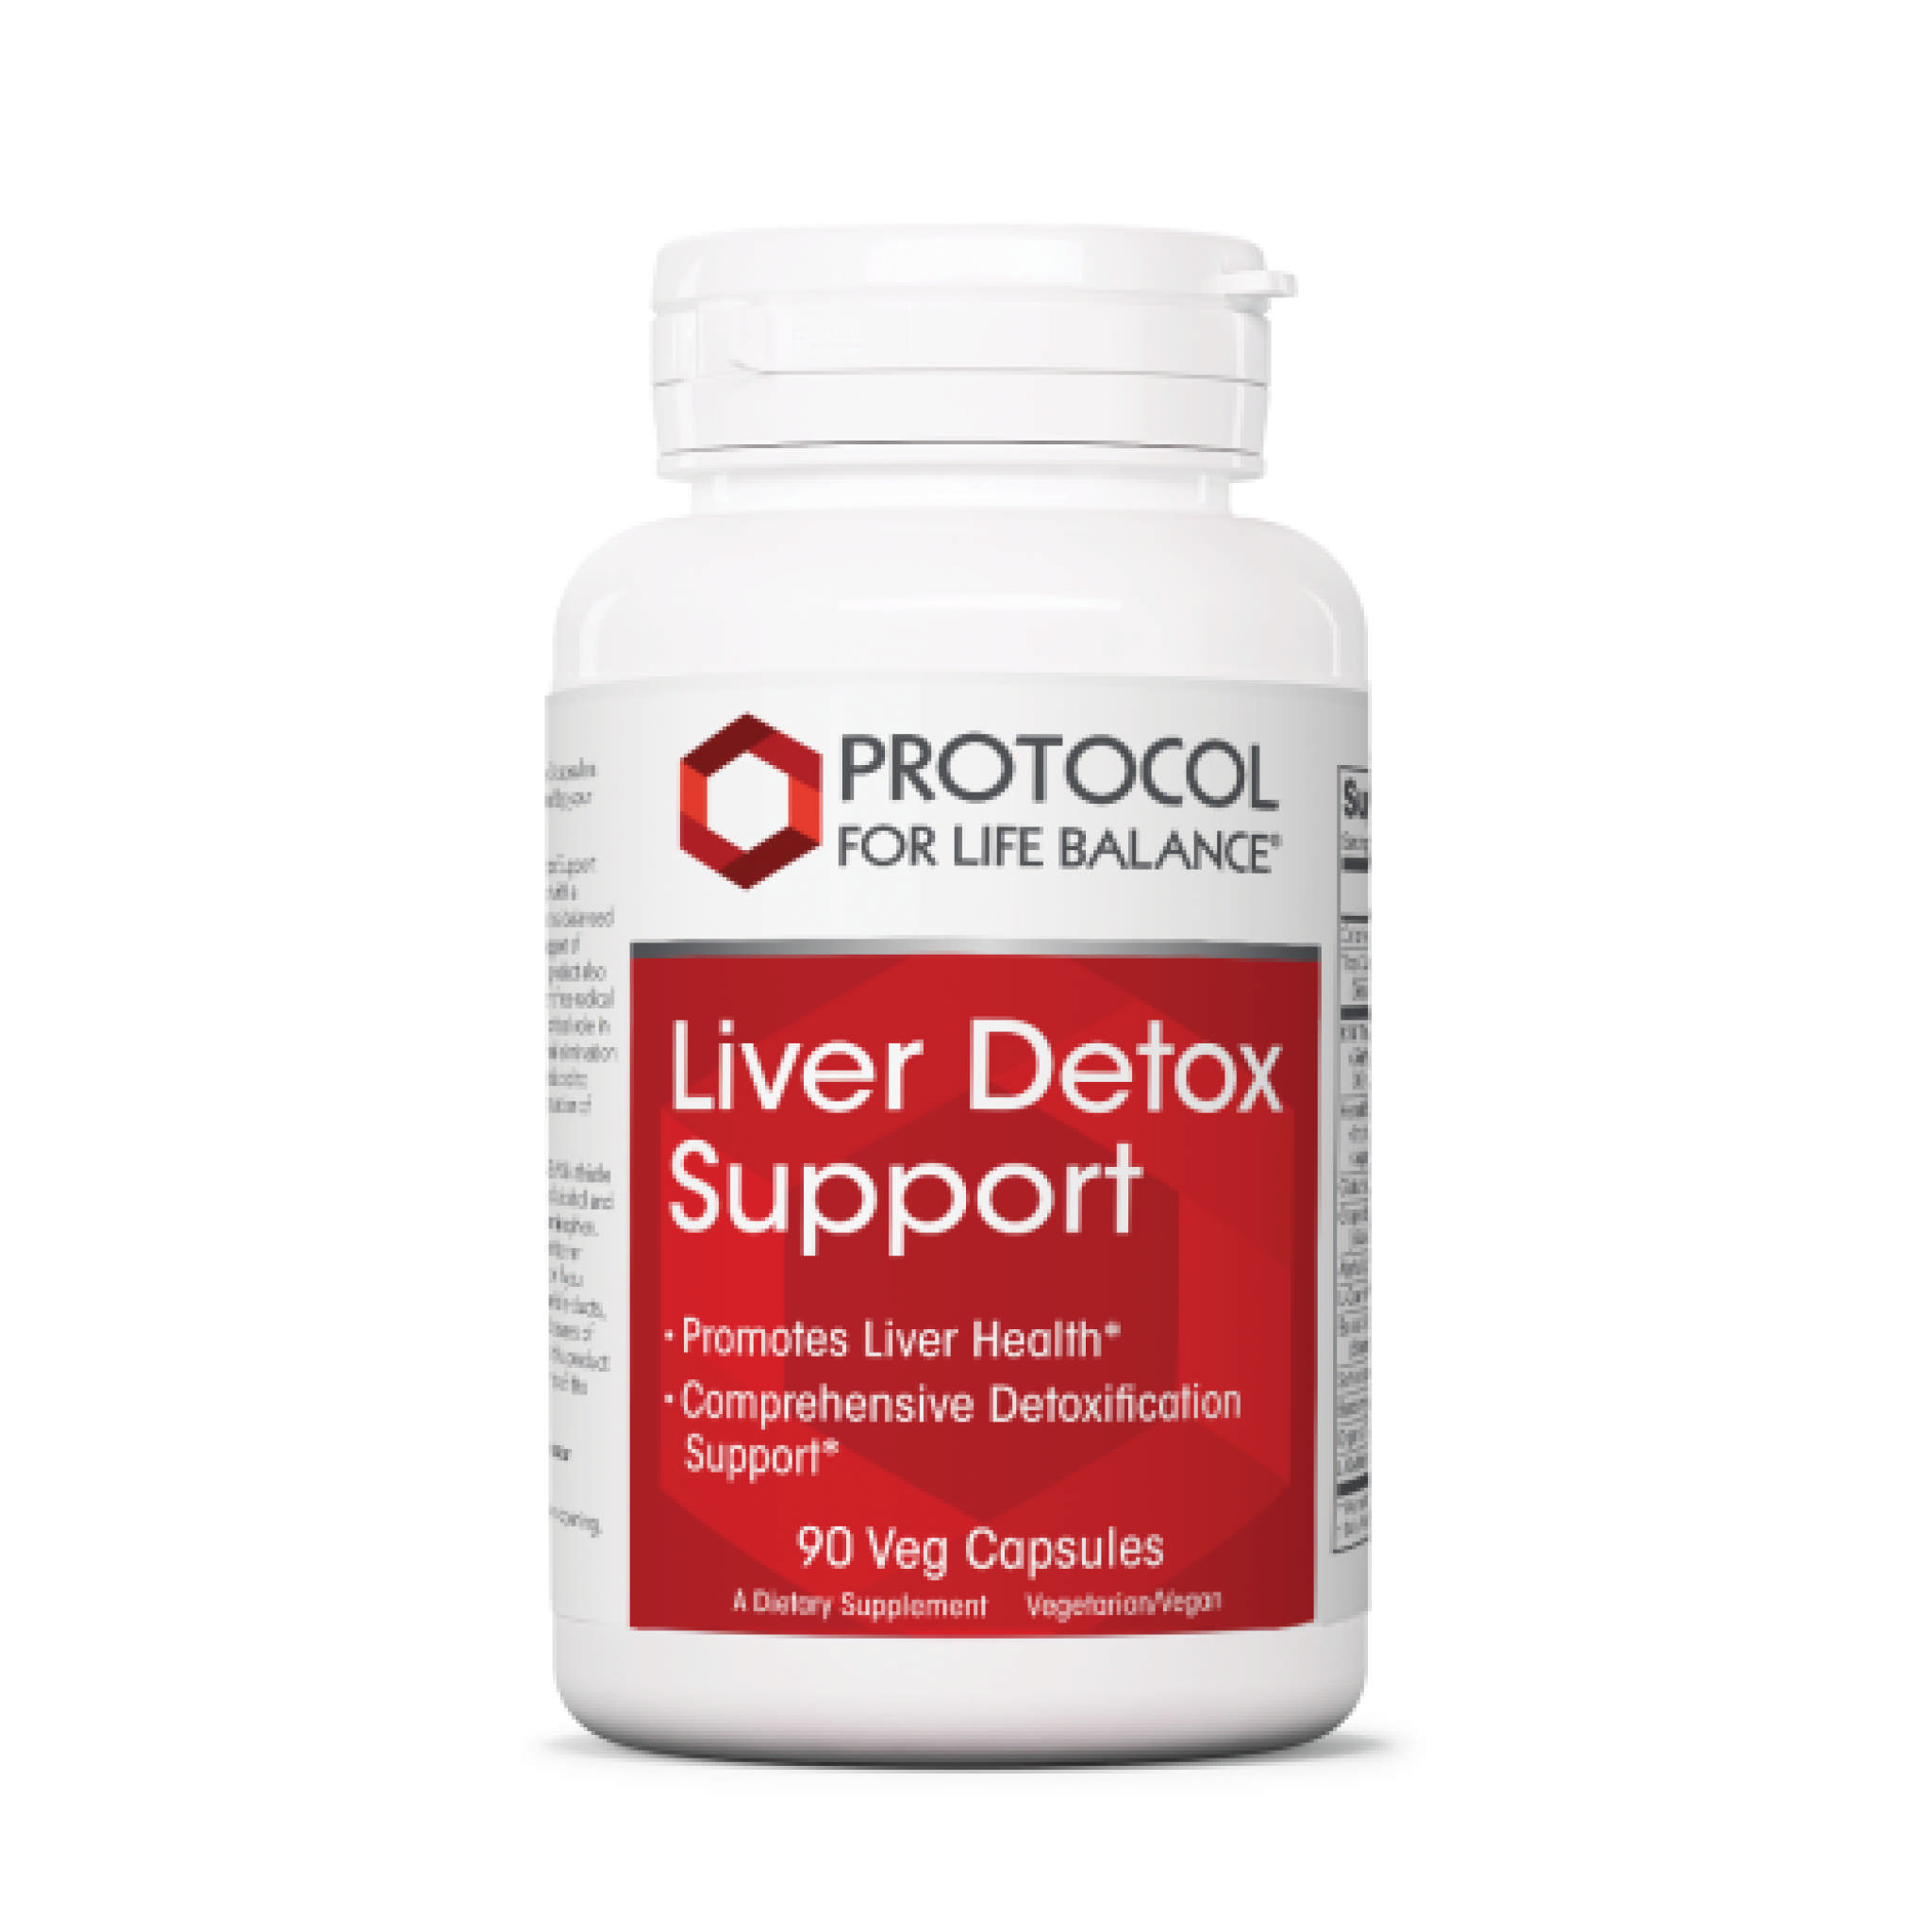 Protocol For Life Balance - Liver Detox Support vCap